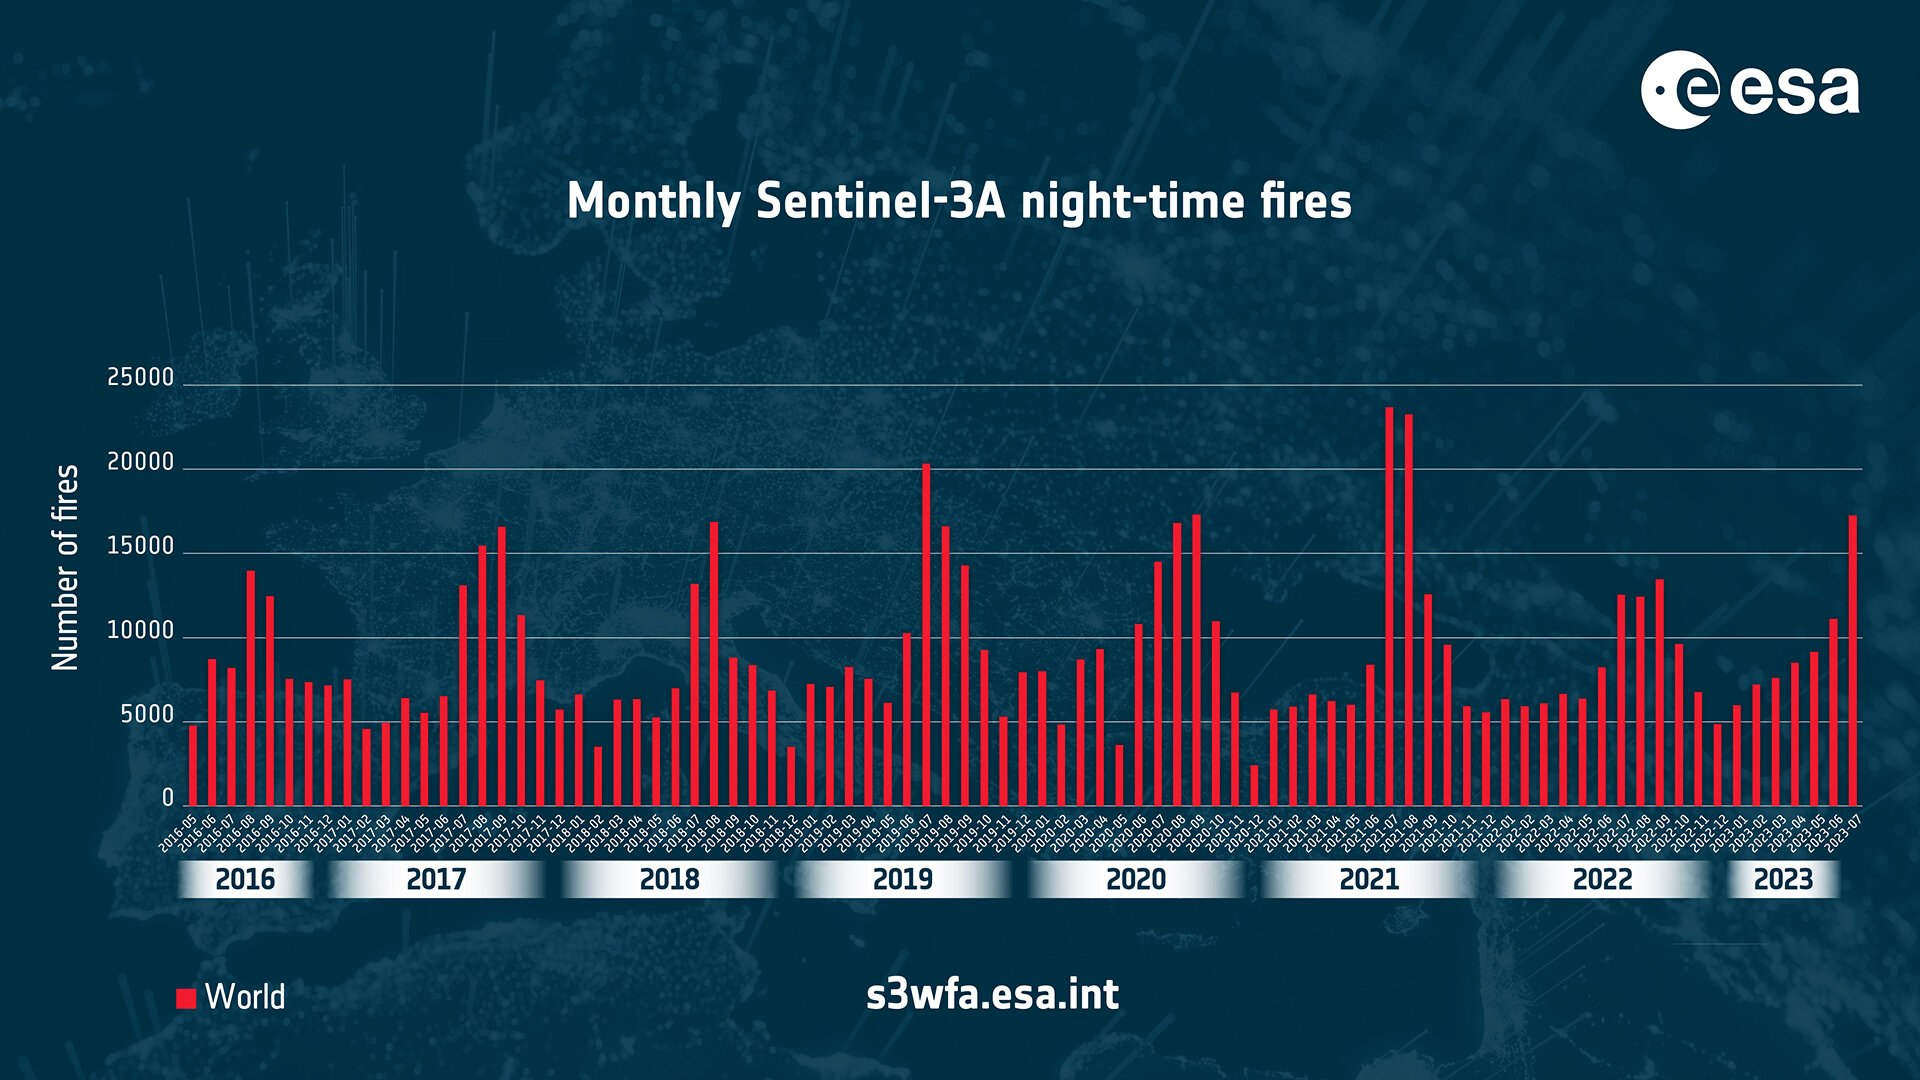 ESA - Worldwide night-time fires